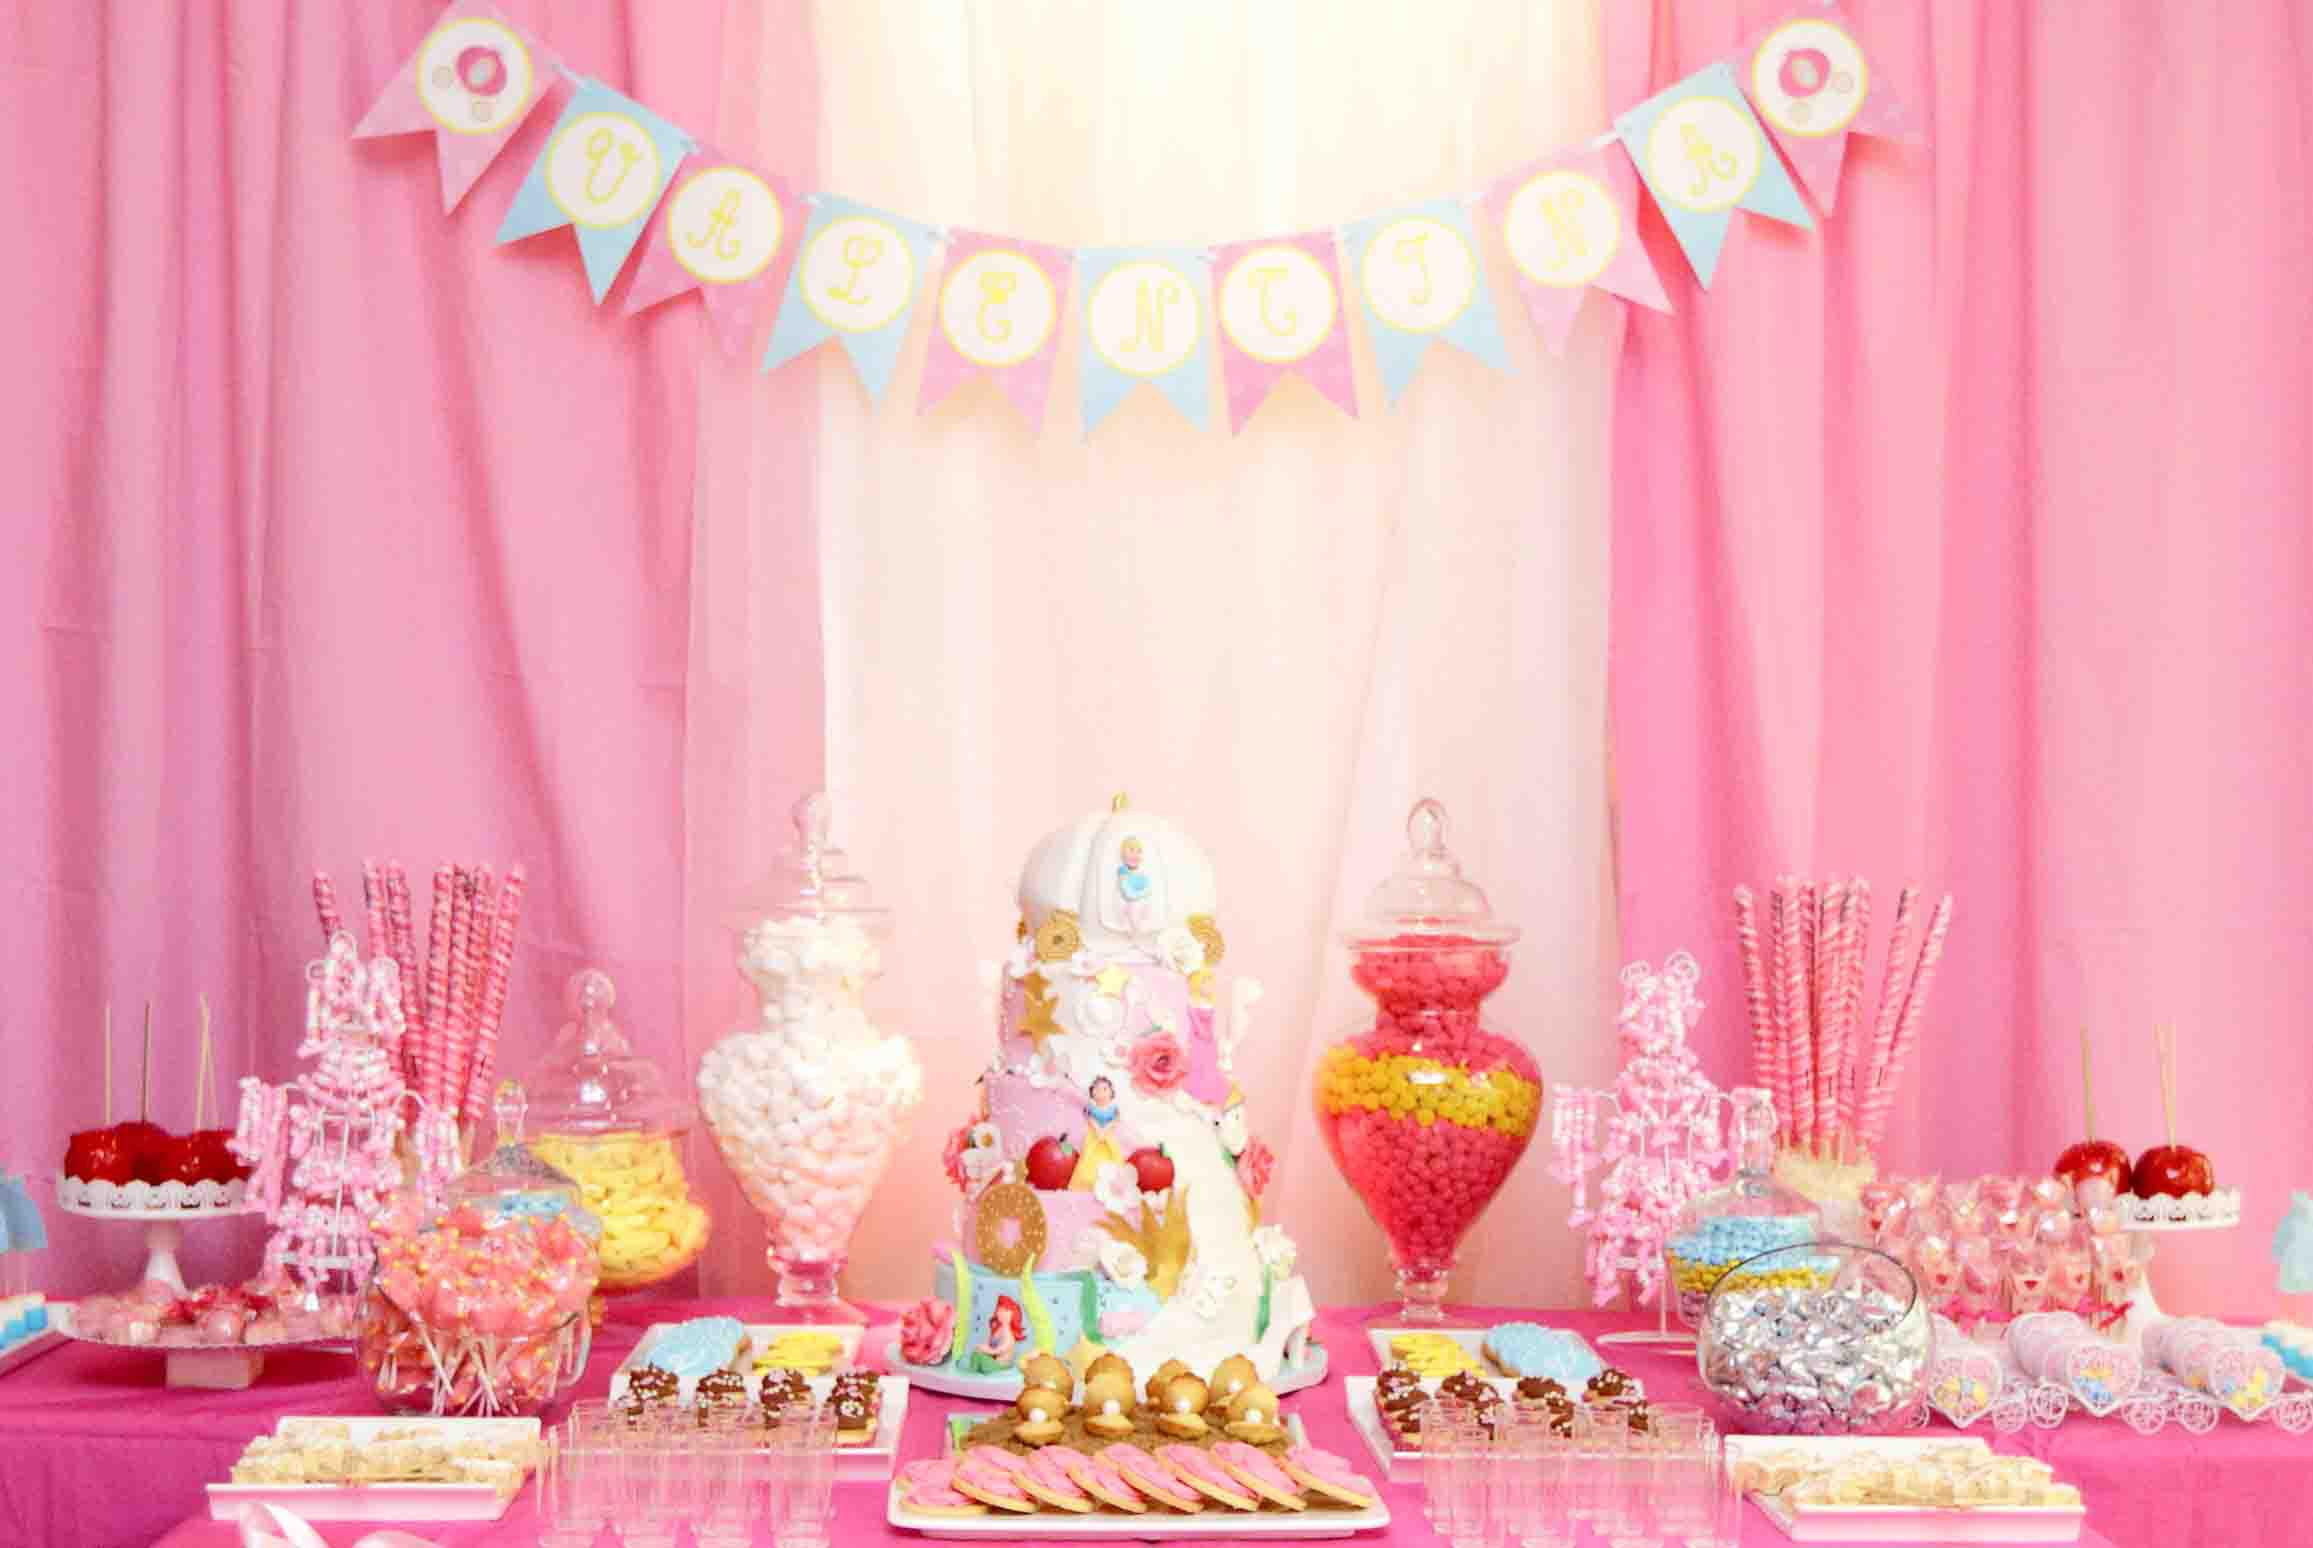 Plan A Birthday Party
 A Birthday Party Planner – Organization Helper